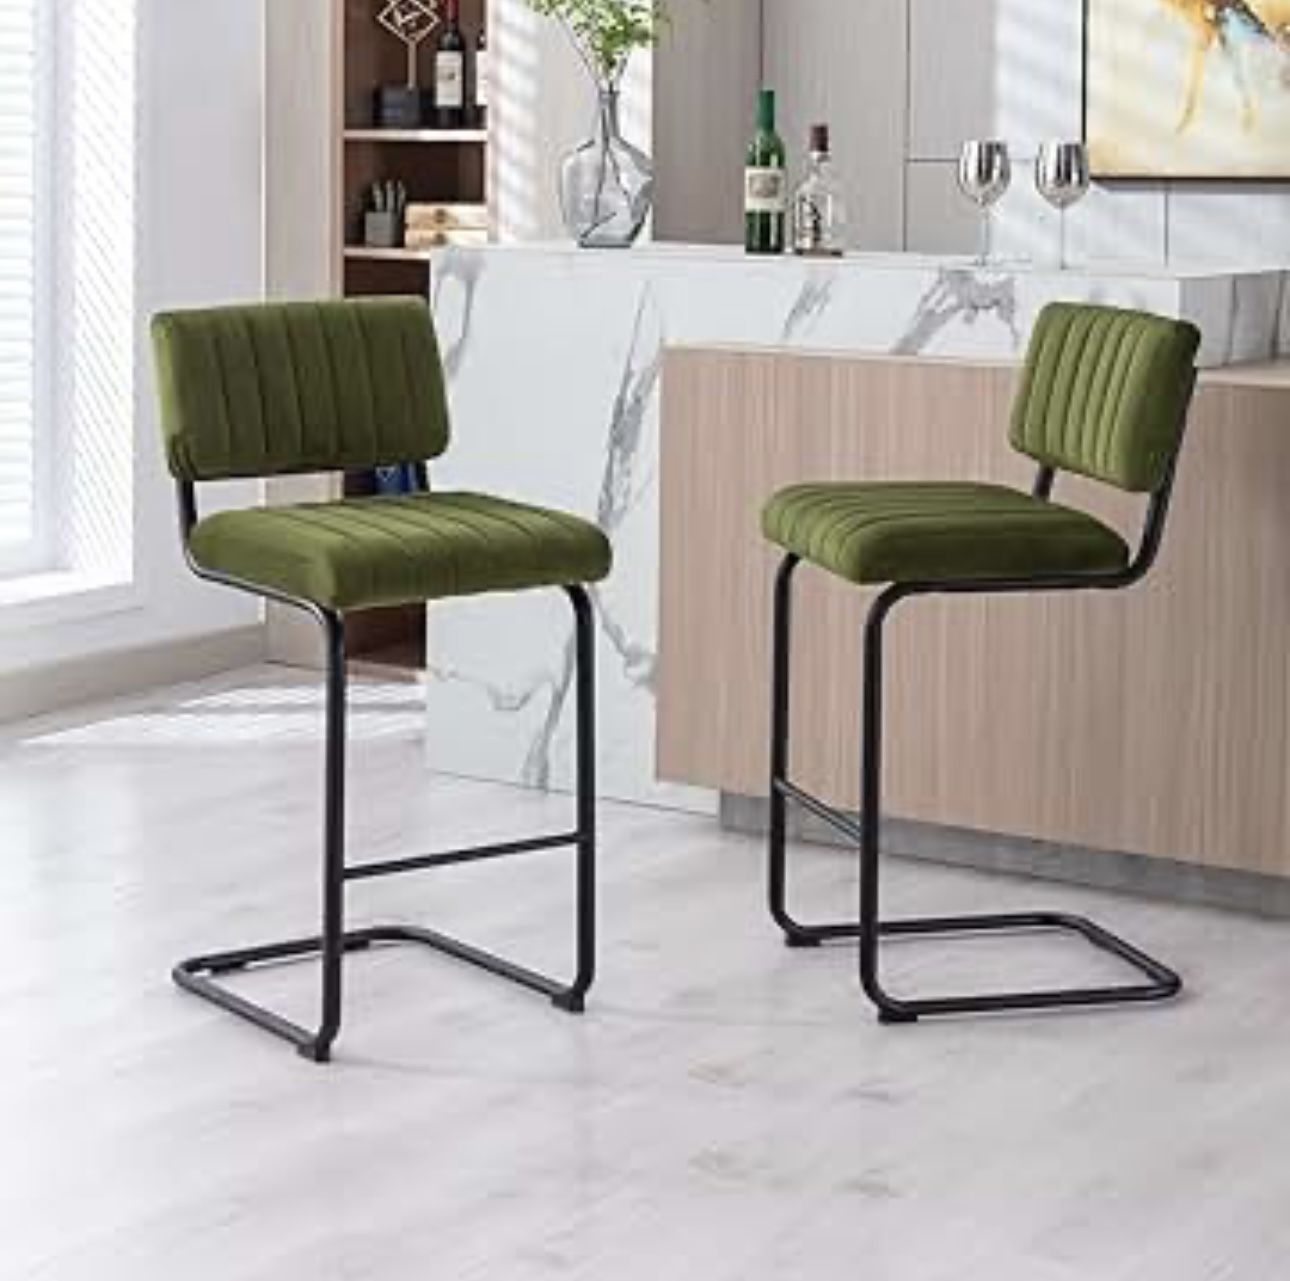 Brand New Island Chairs/bar Stools